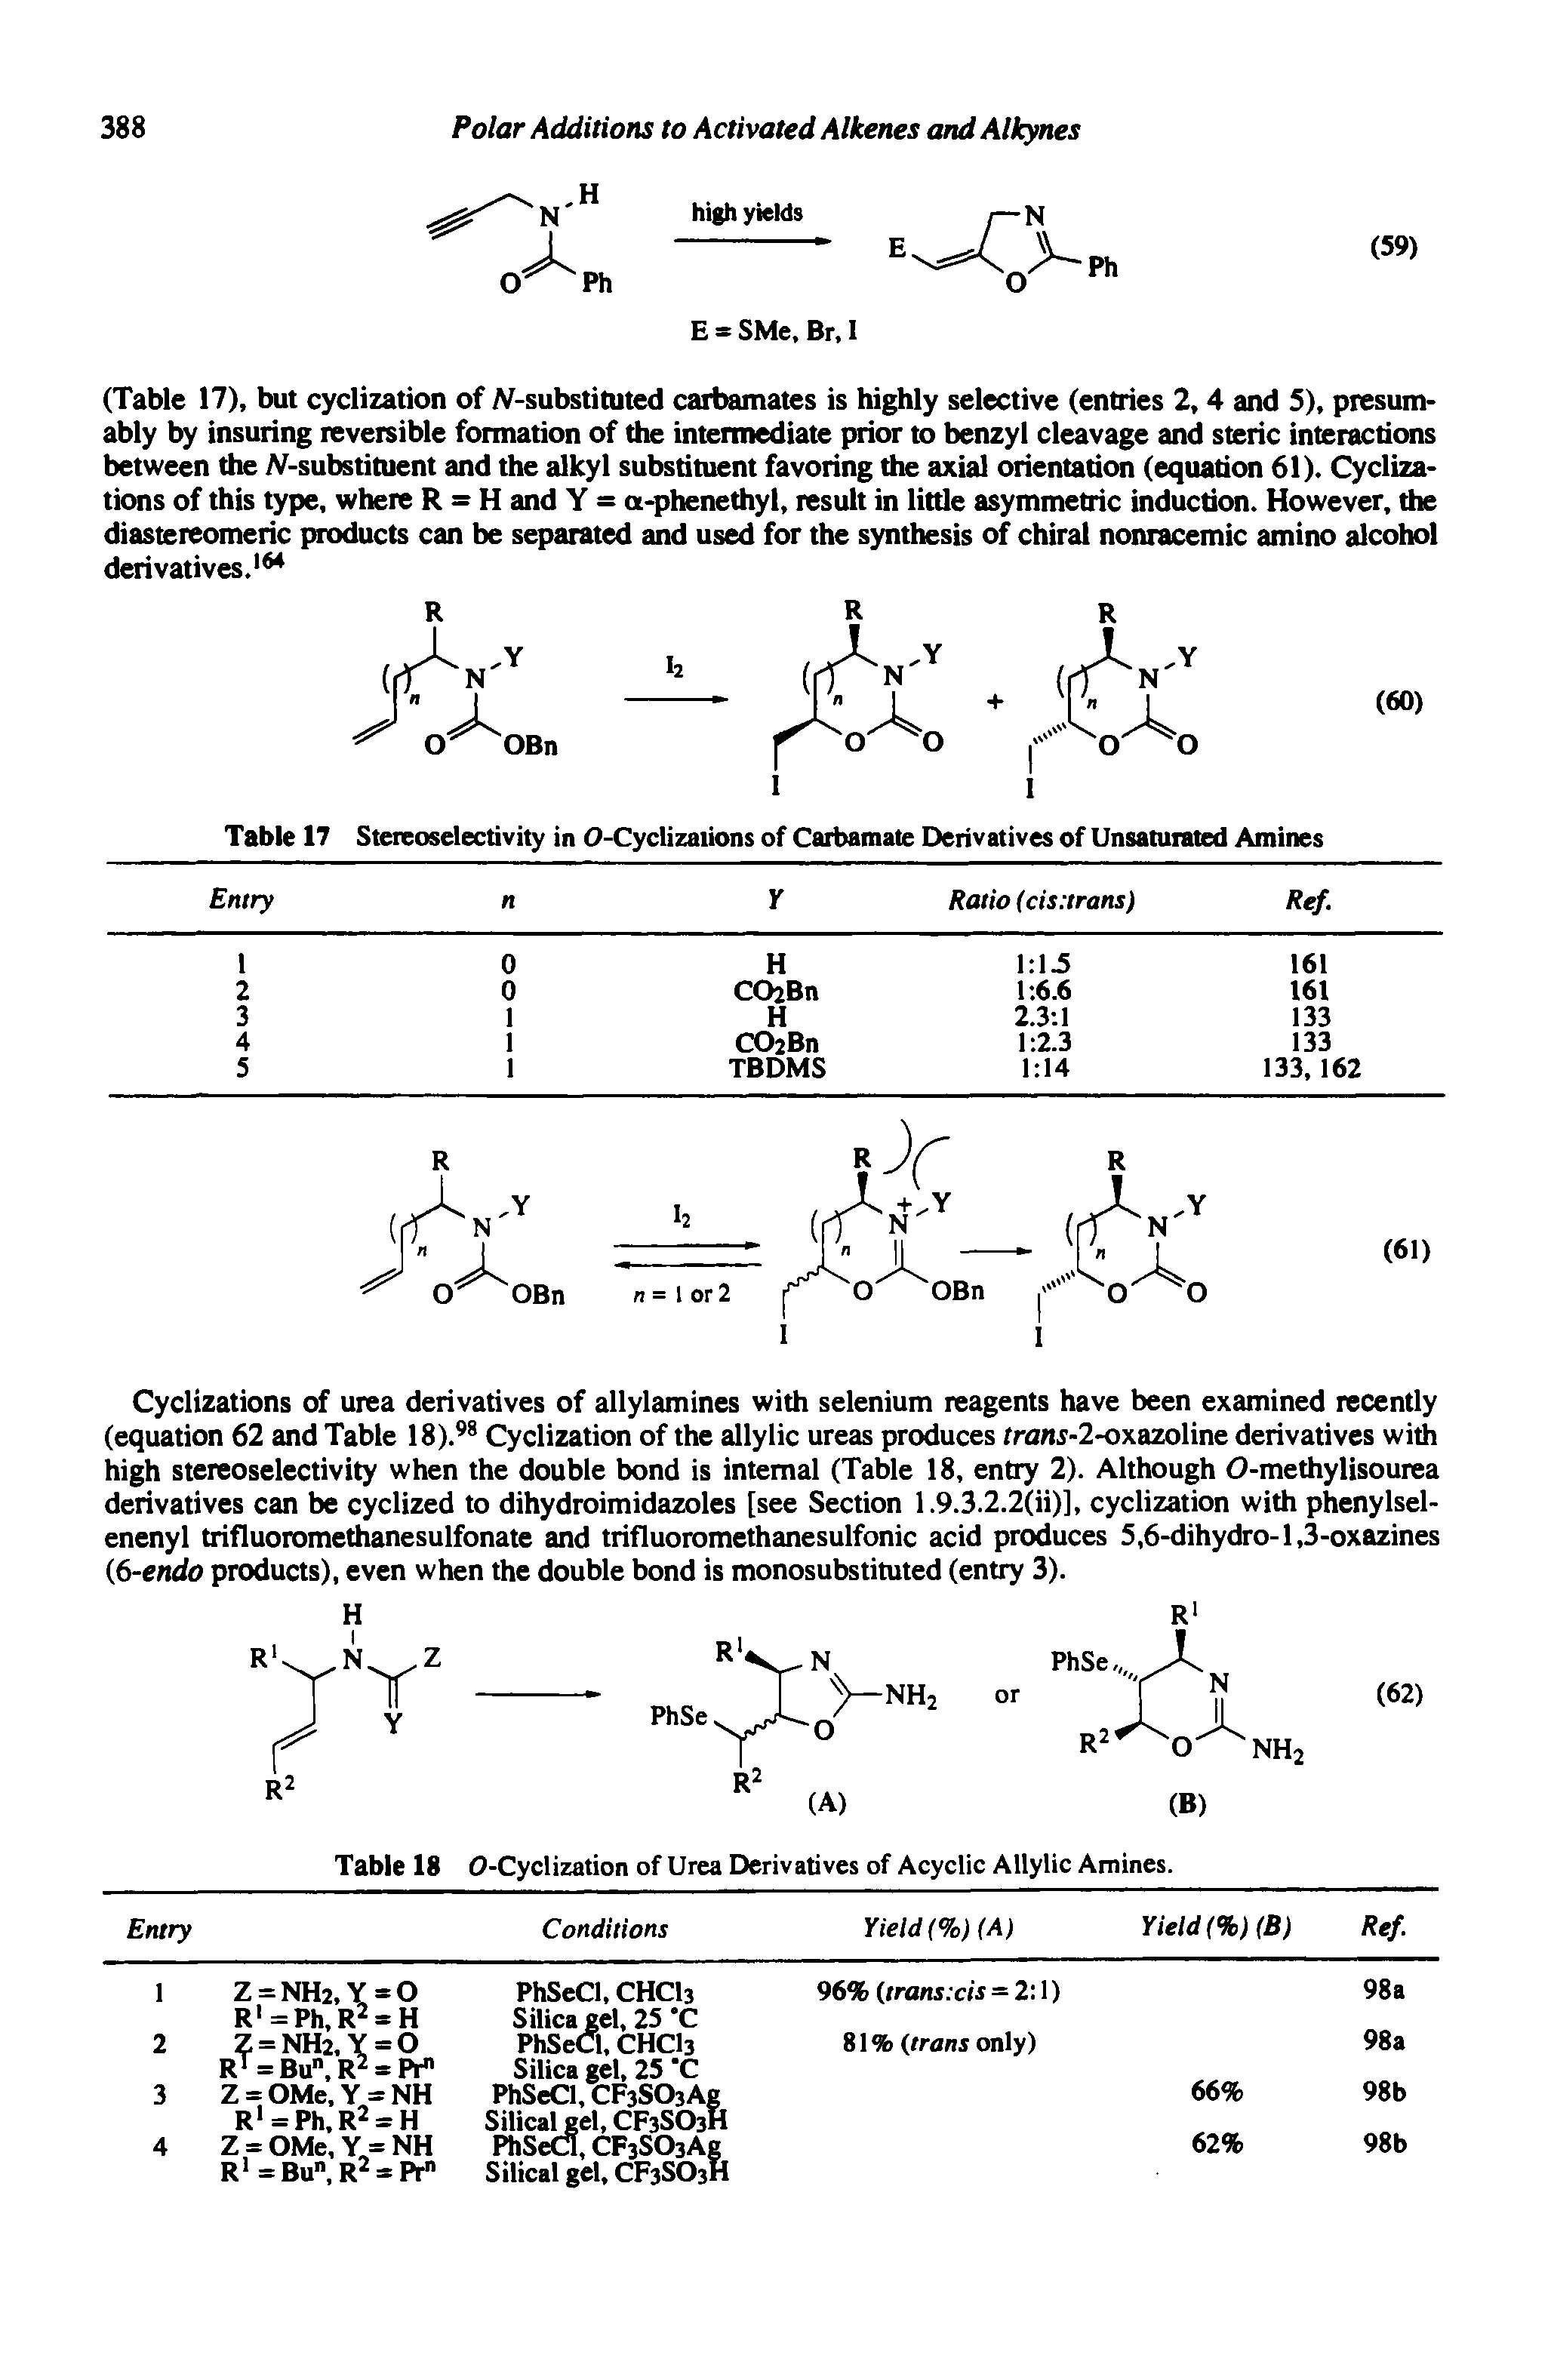 Table 18 0-Cyclization of Urea Derivatives of Acyclic Allylic Amines.